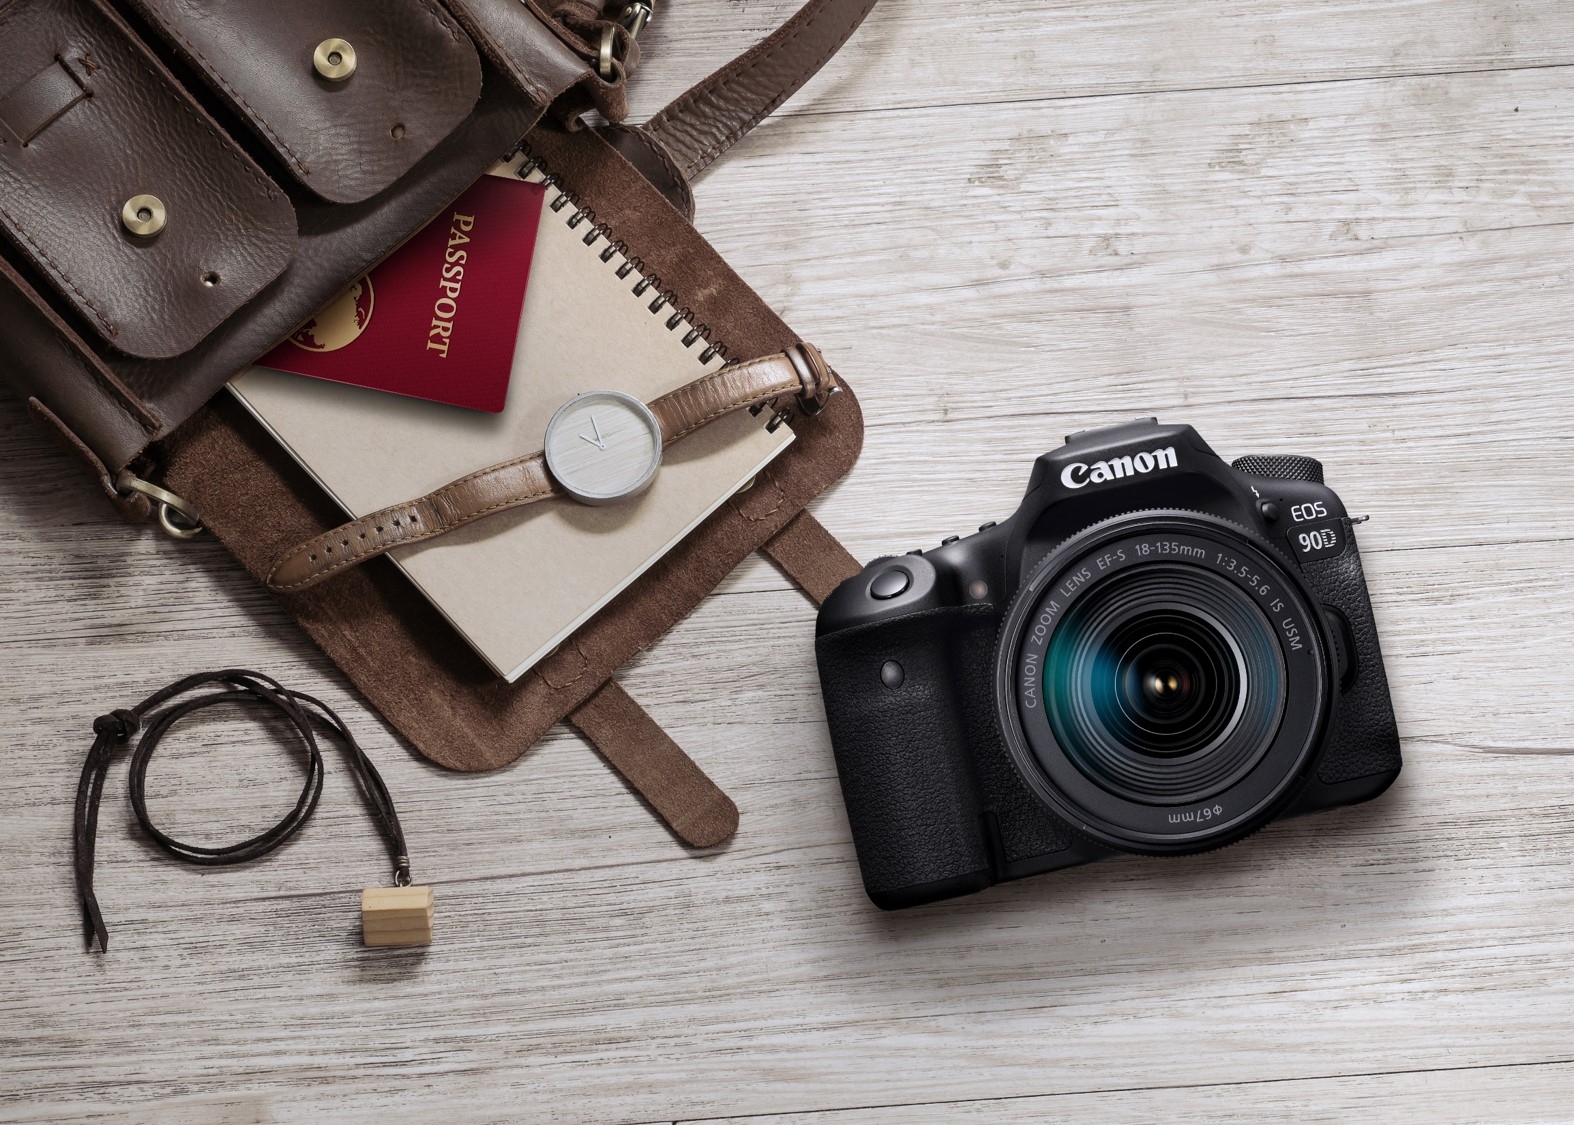 Canon 全新款單眼相機 EOS 90D